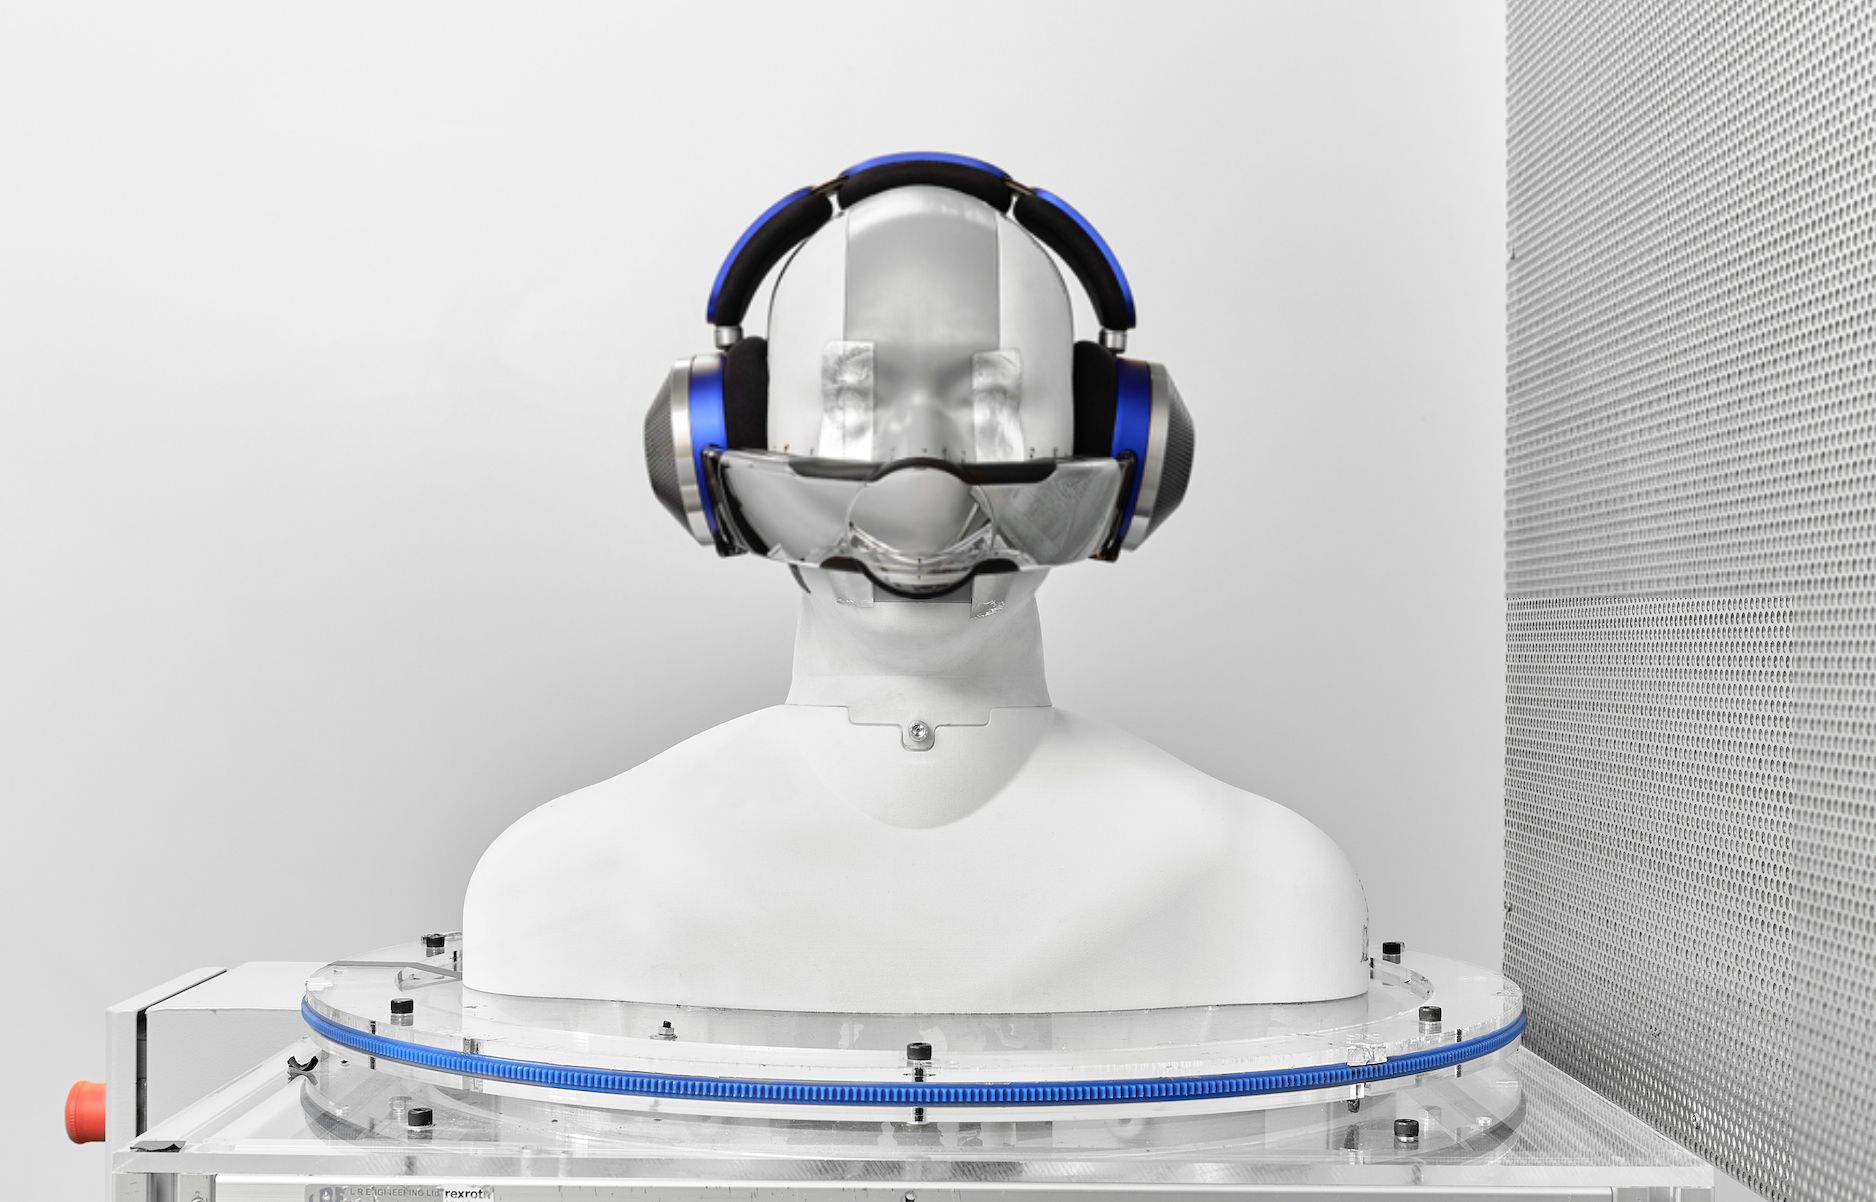 dyson zone anc headphones on white realistic human head torso